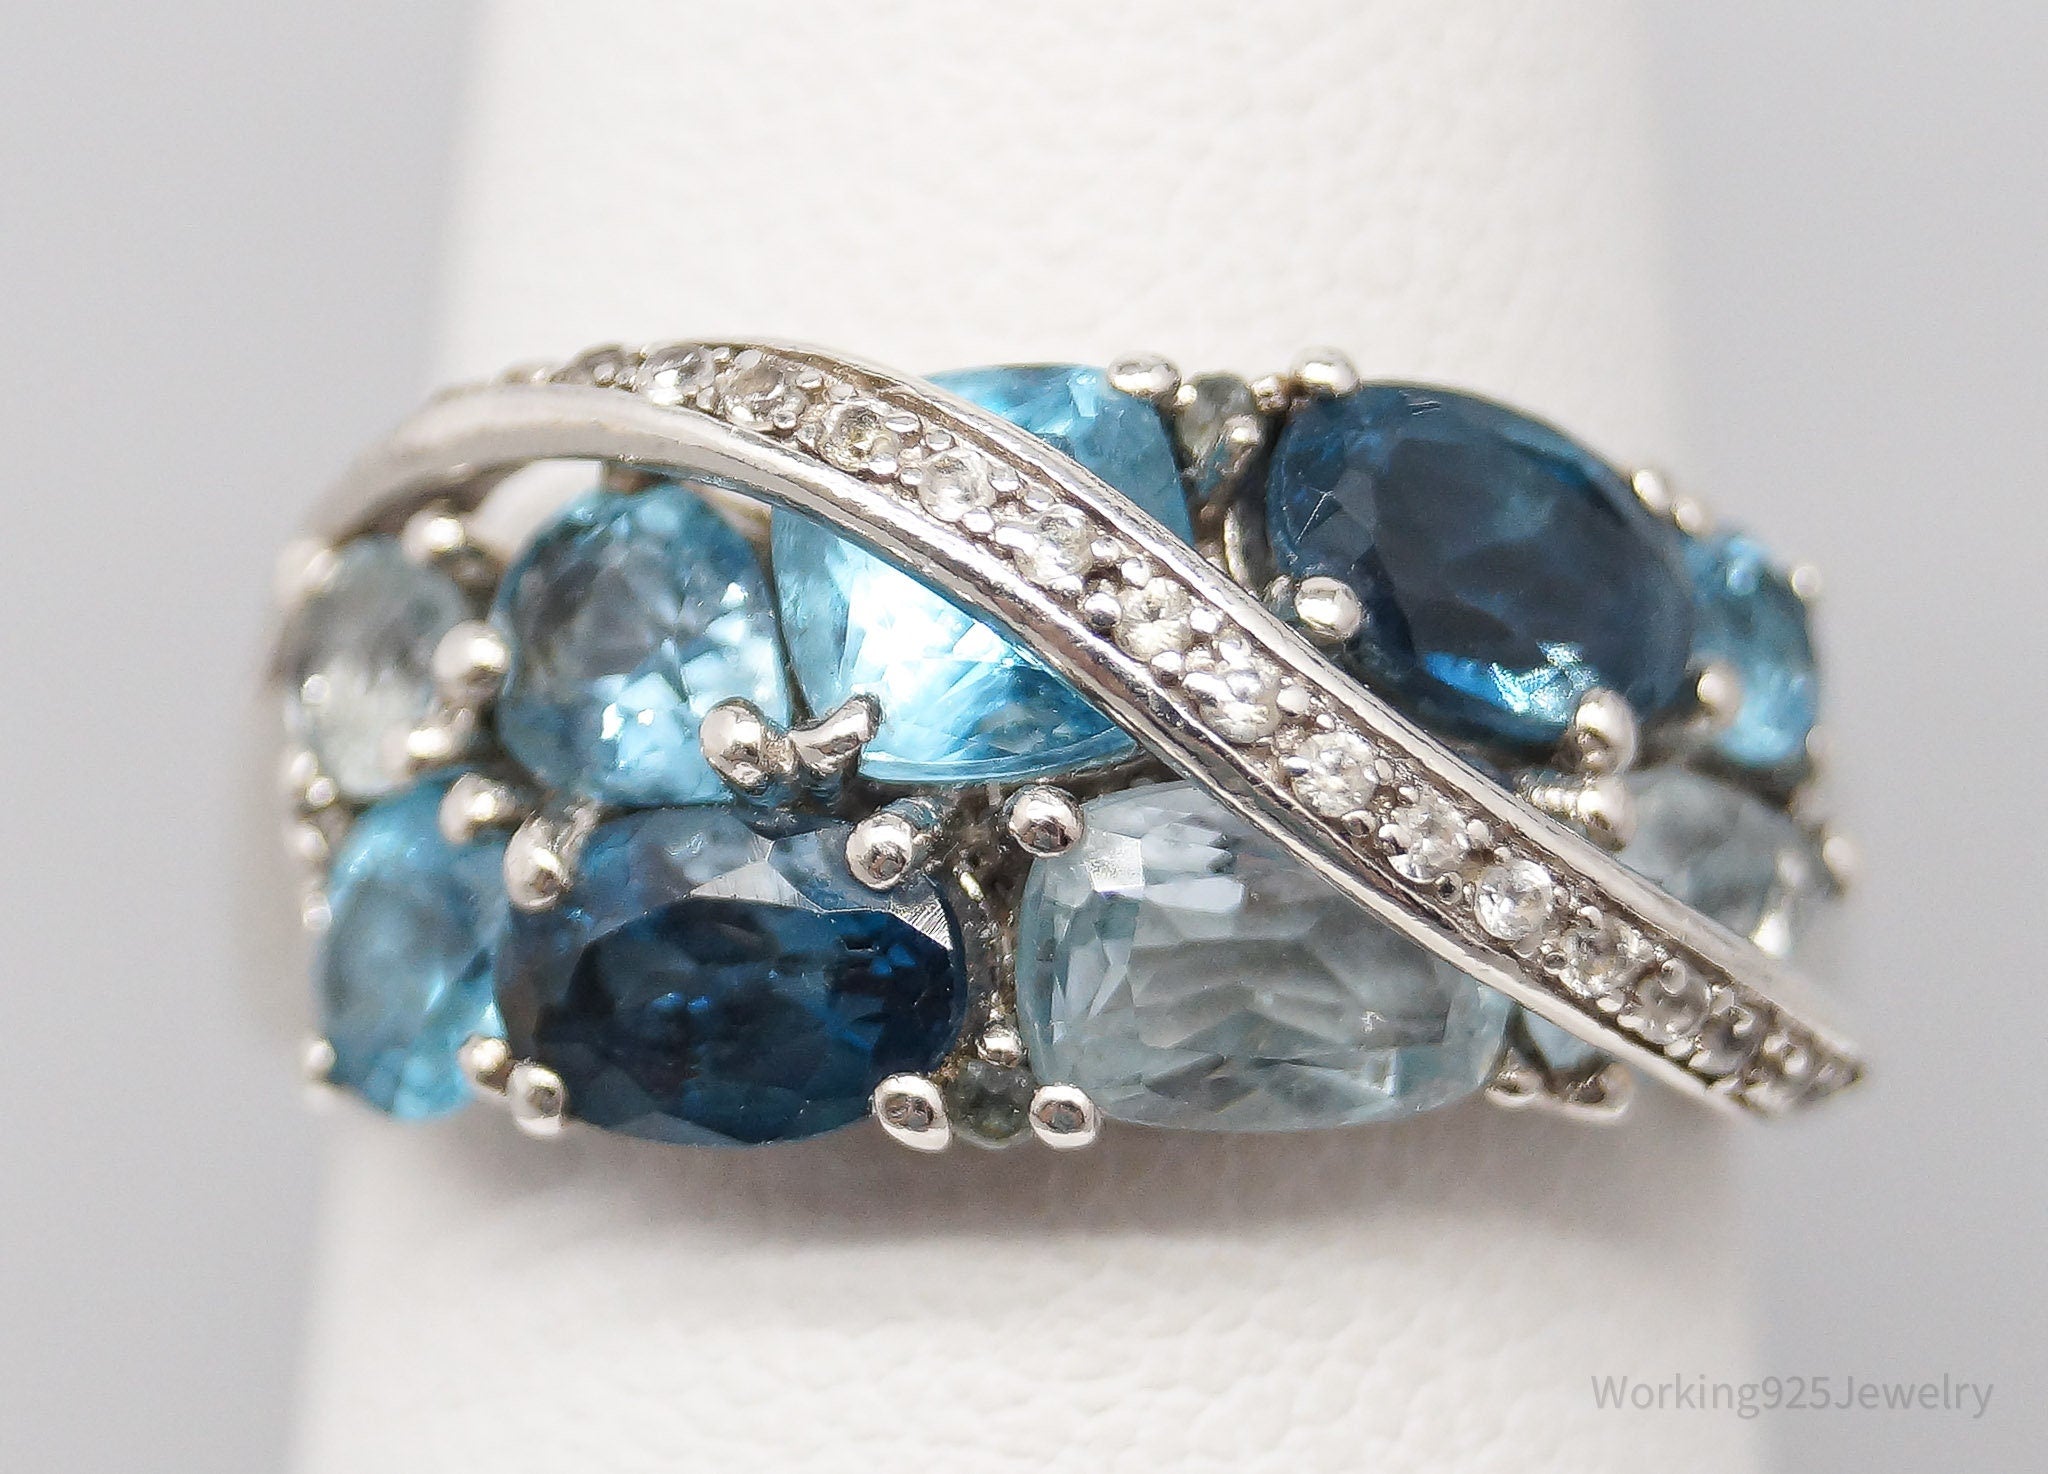 Vintage Blue & White Topaz Sterling Silver Ring - Size 7